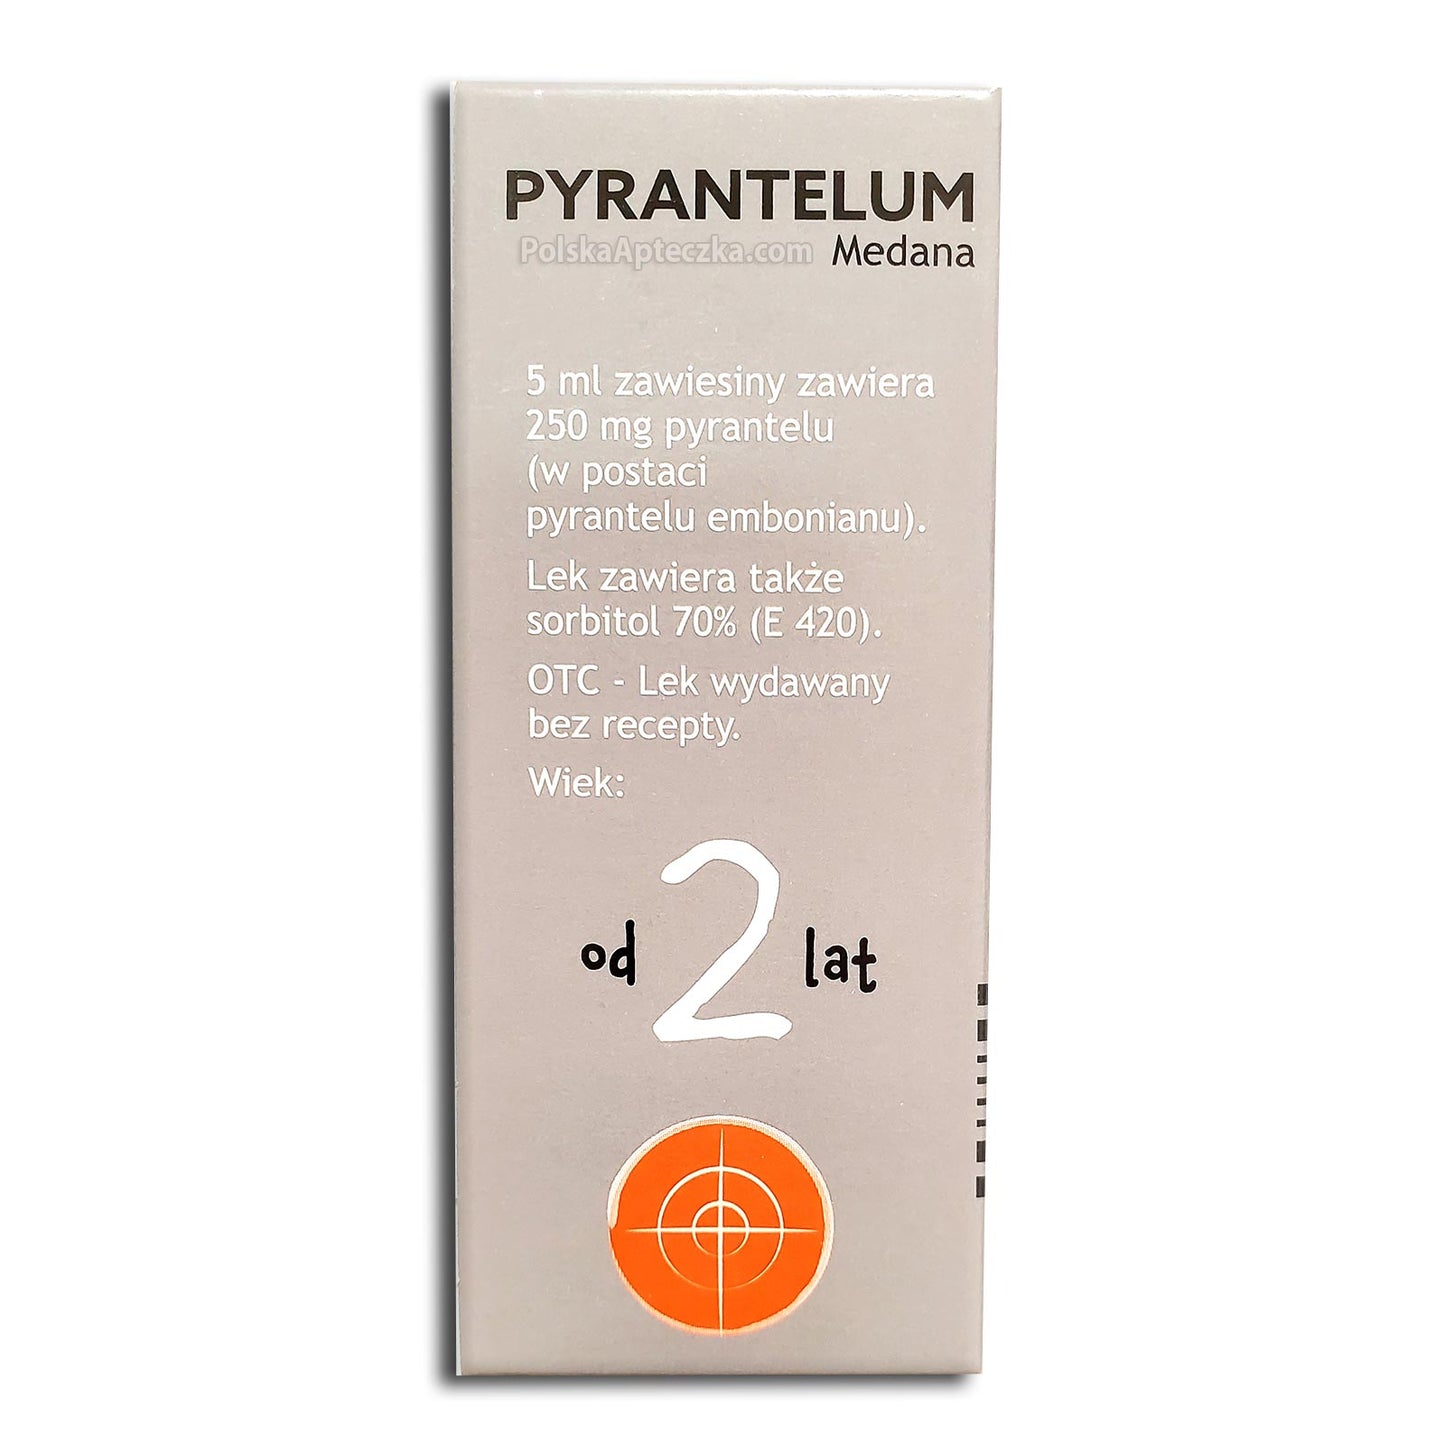 Pyrantelum owix